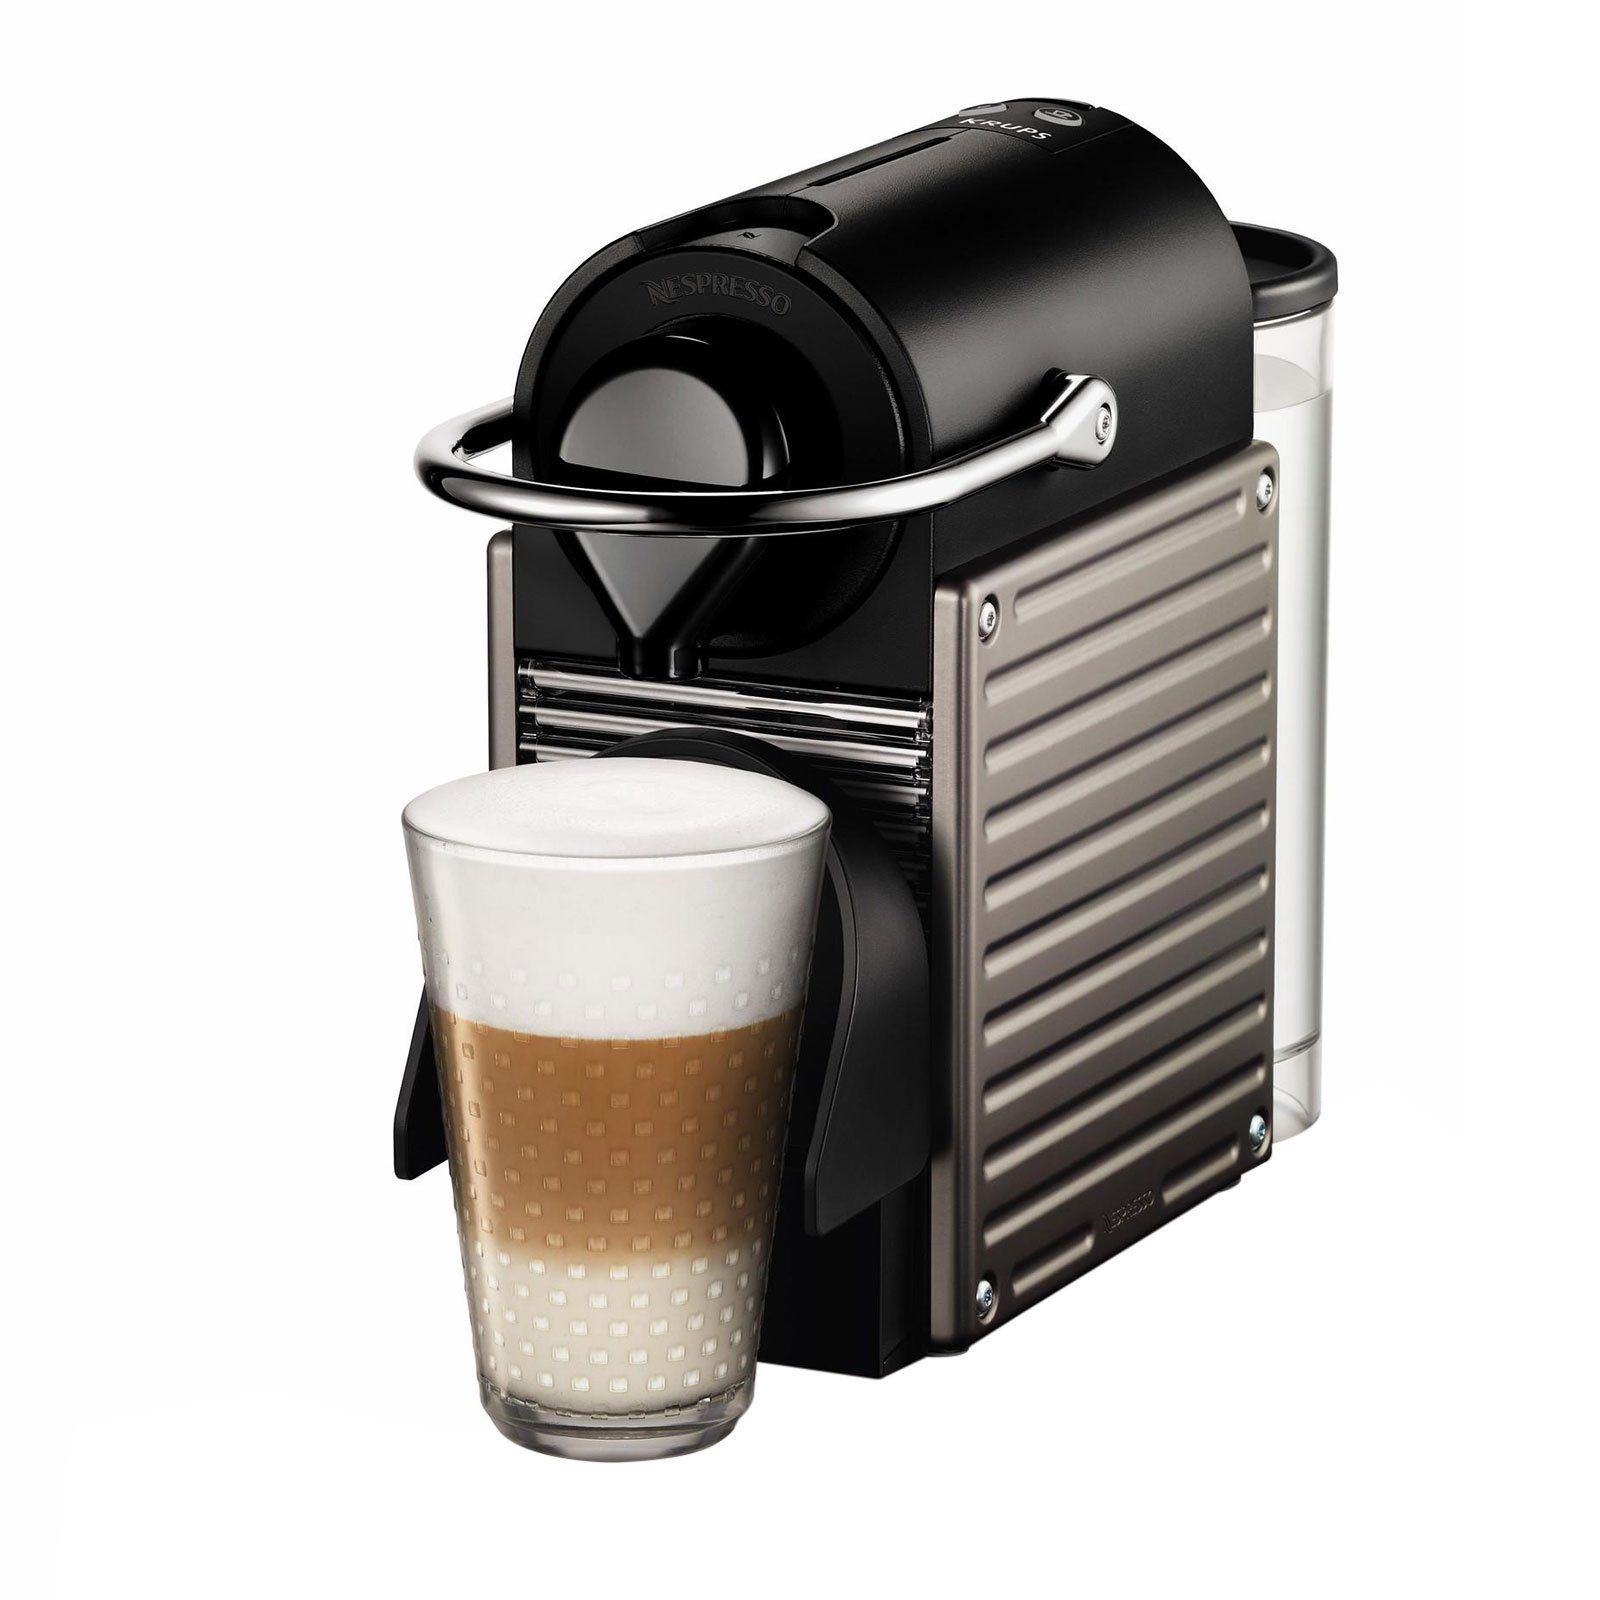 XN die 3045, Krups flexibel Kapselmaschine Kaffeesorten aussuchen